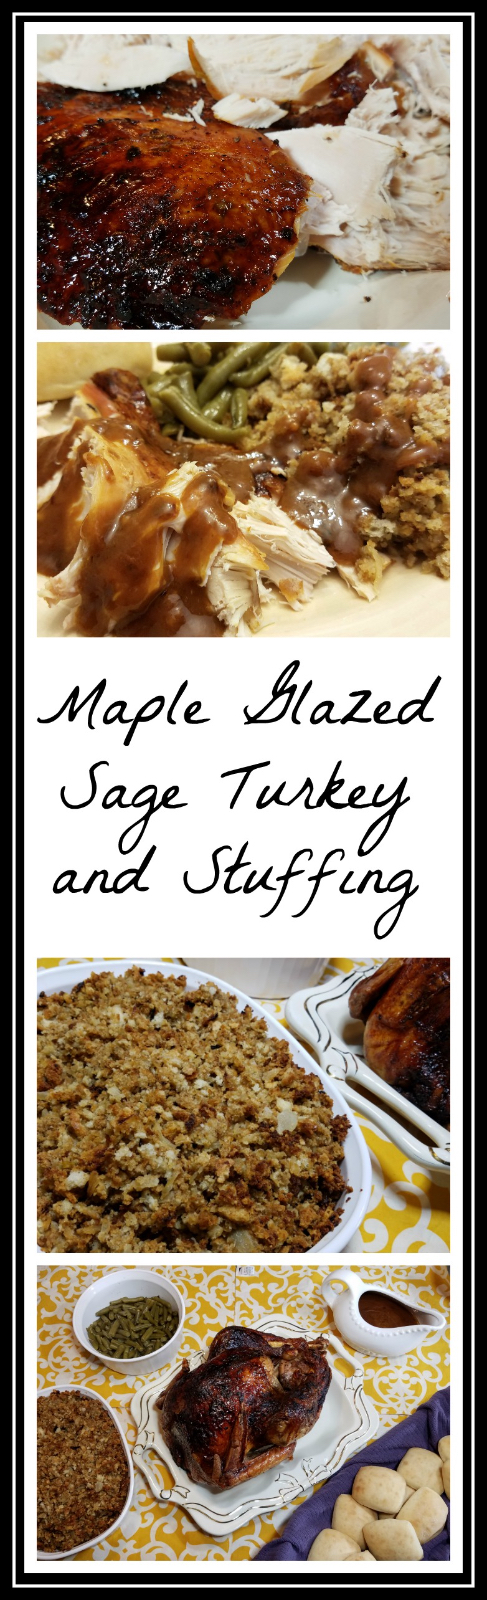 Maple Glazed Sage Turkey